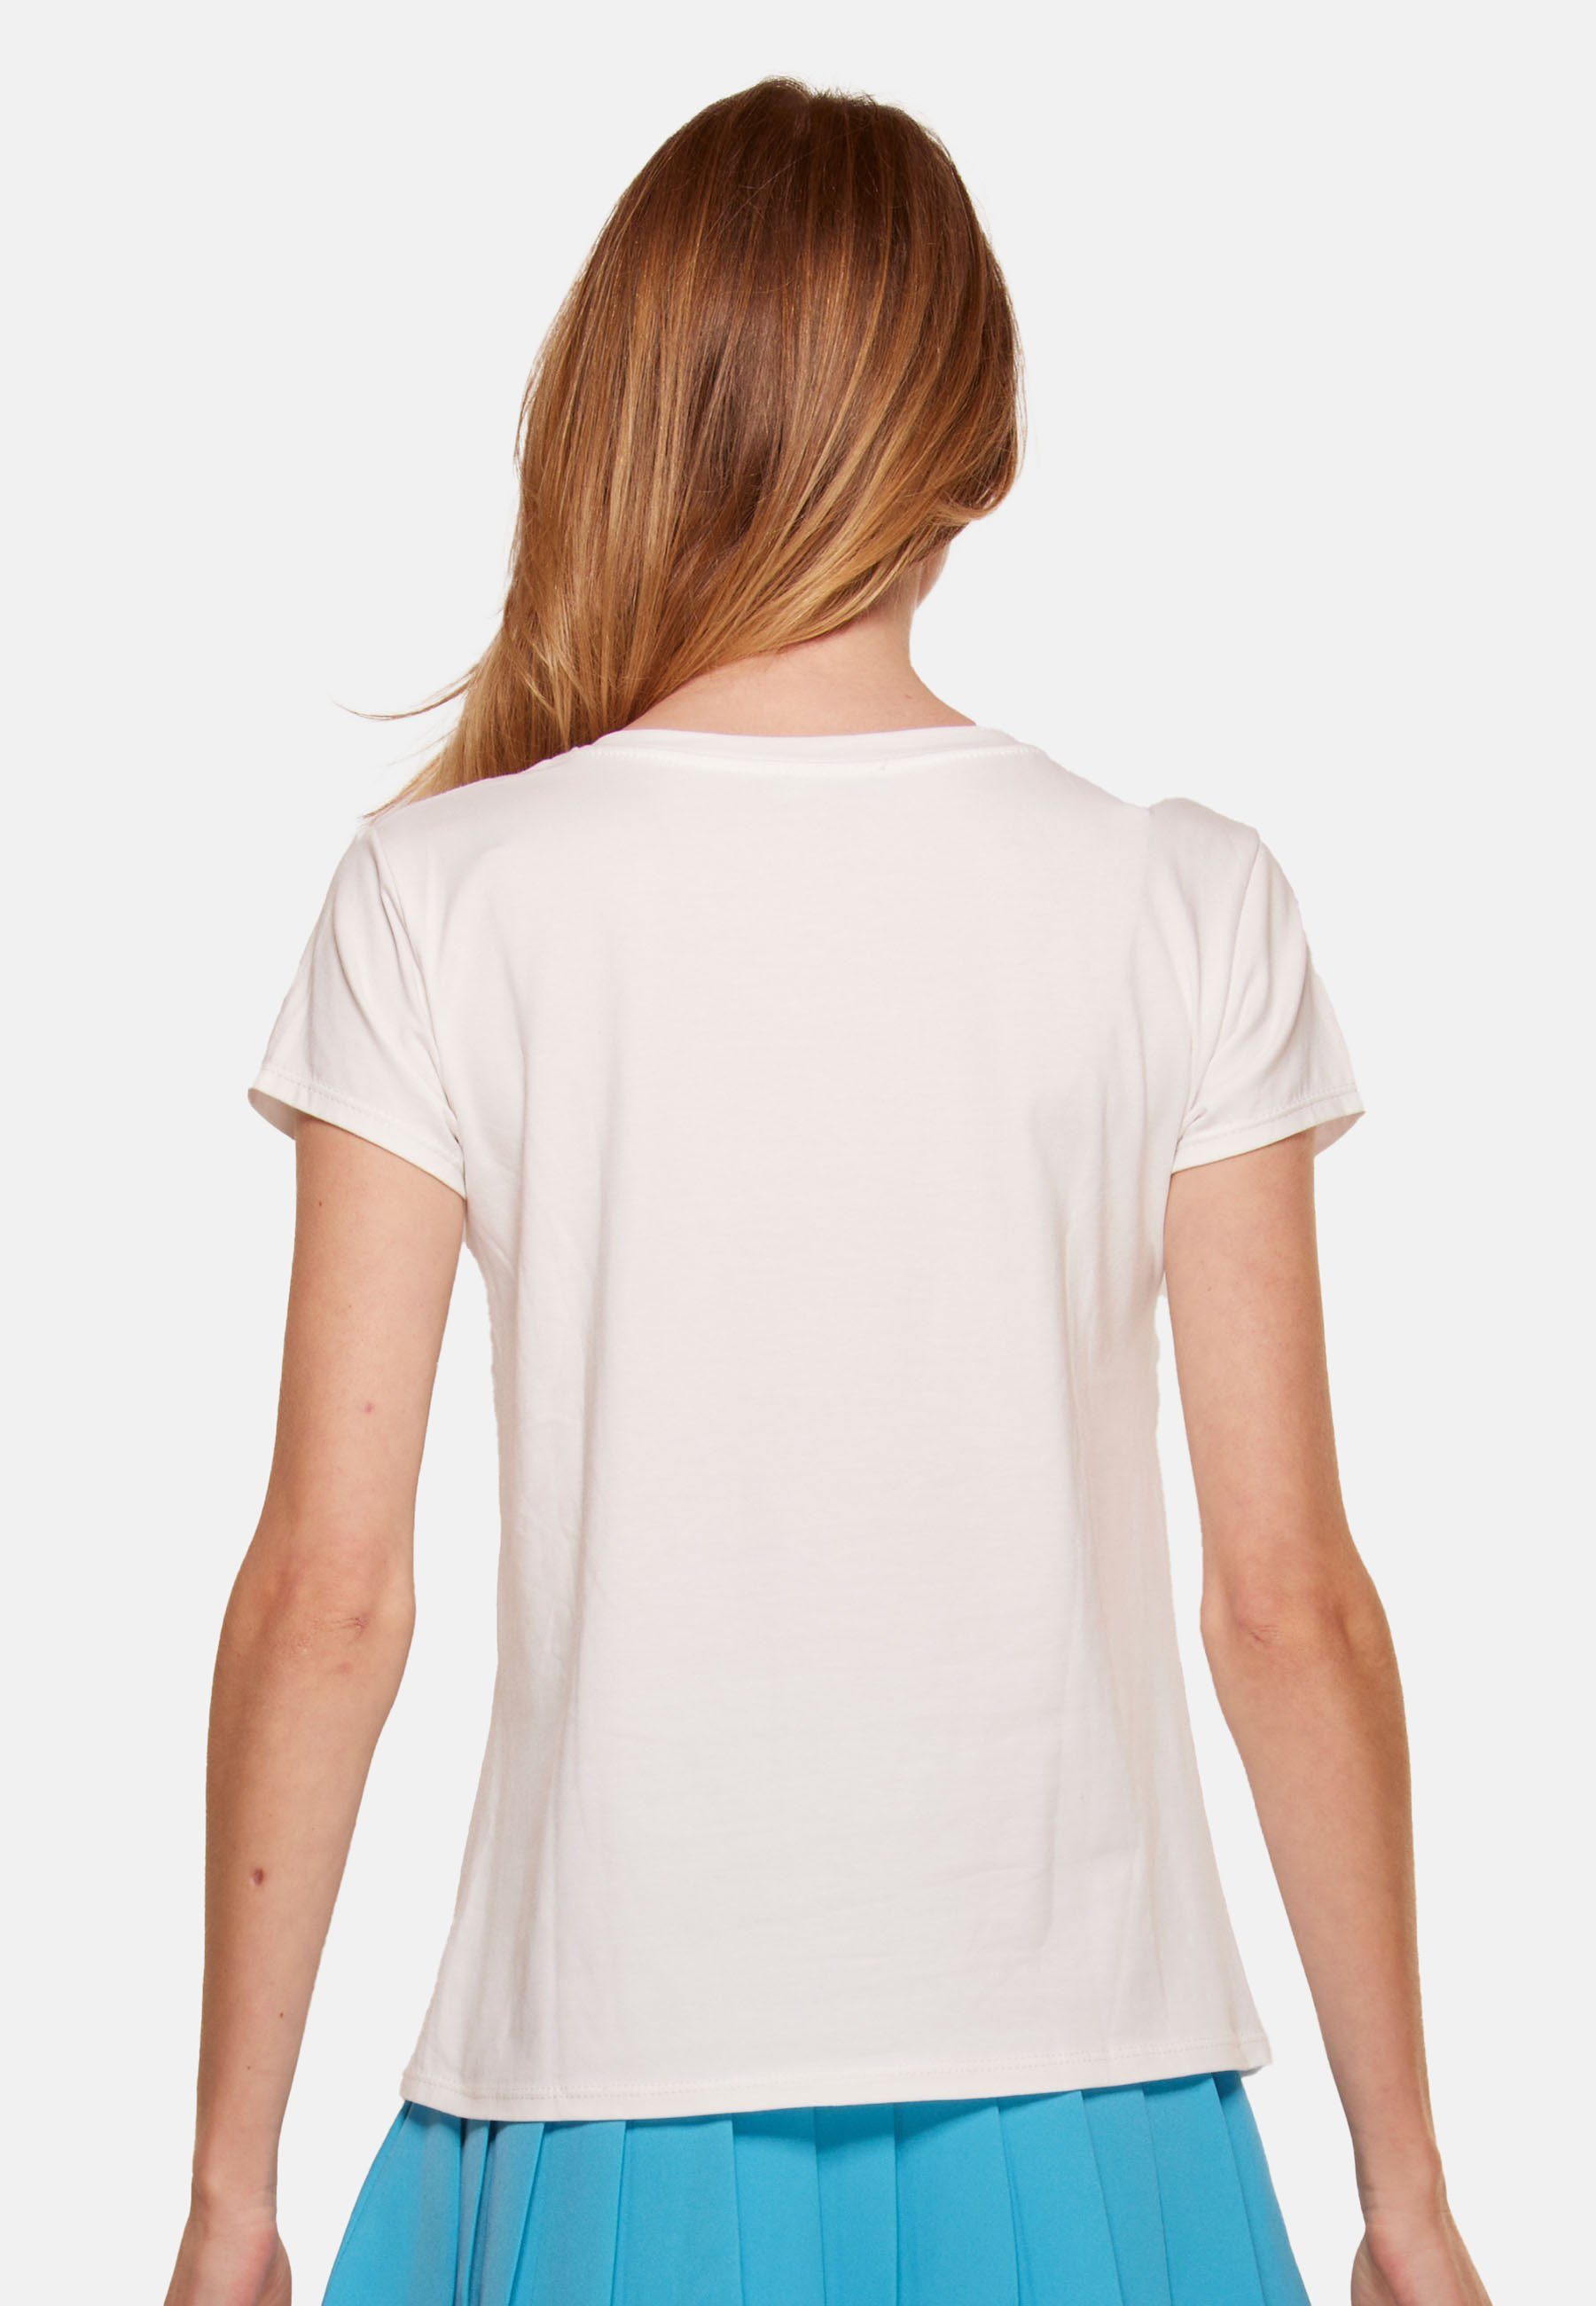 Tooche Print-Shirt Stylish T-shirt